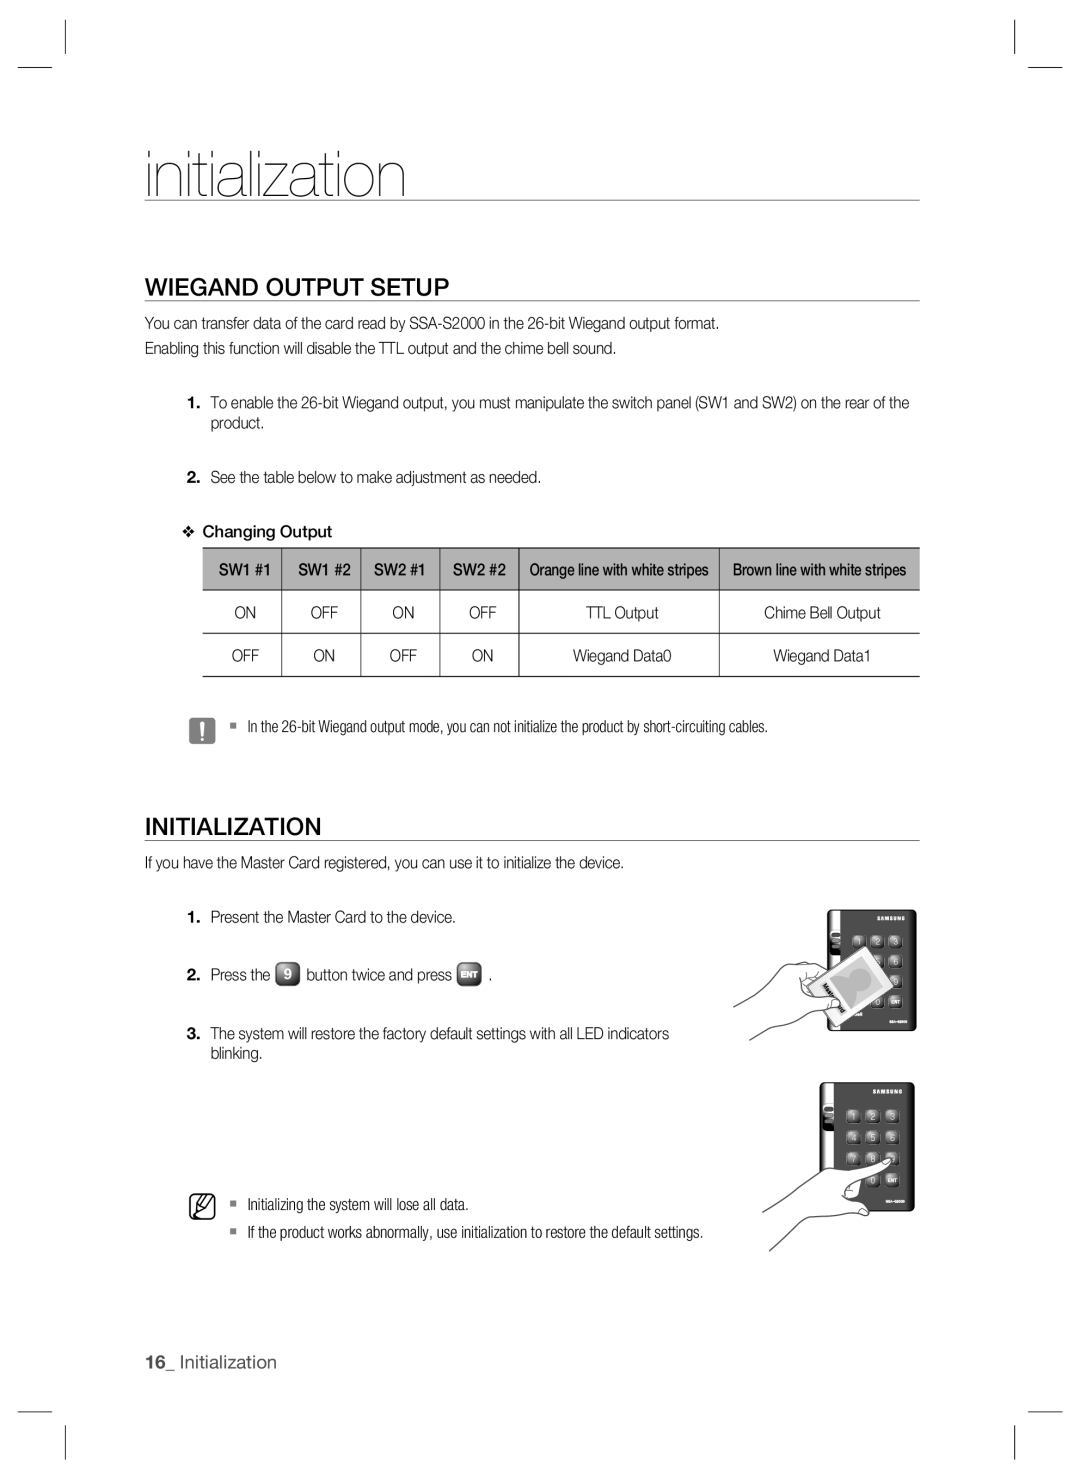 Samsung SSA-S2000W user manual Wiegand Output Setup, 16_ Initialization, initialization 